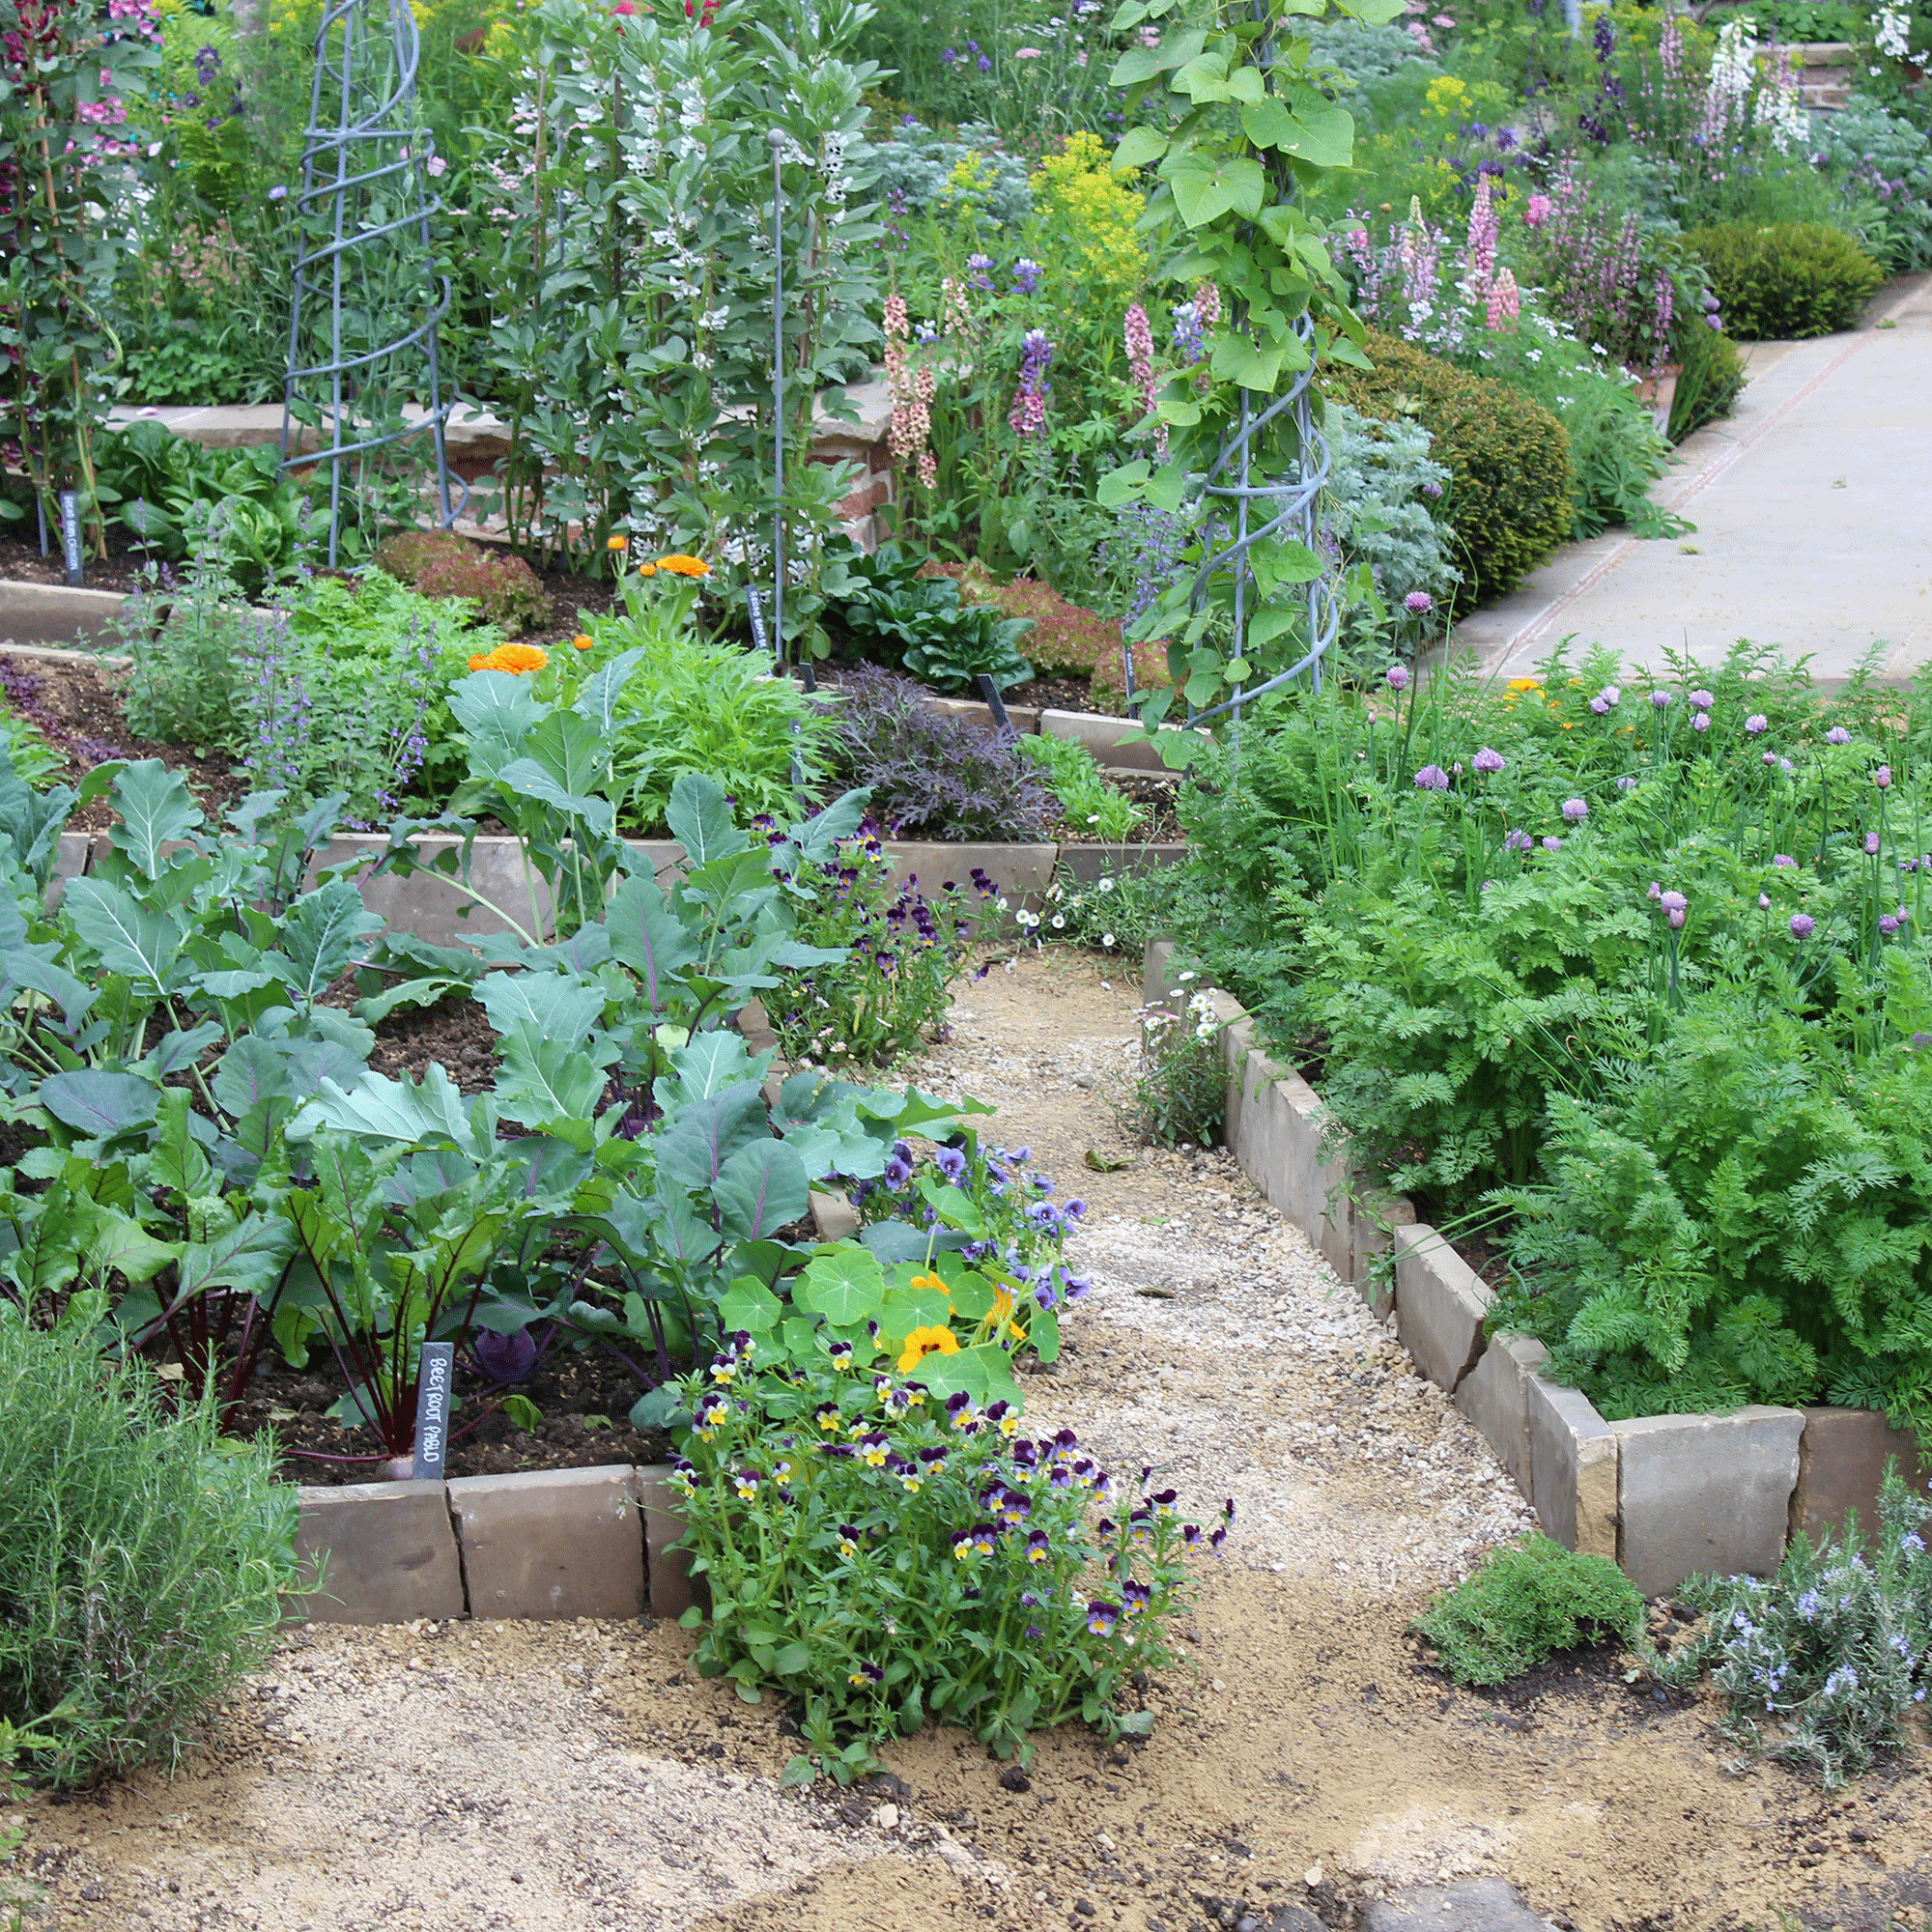 flower beds filled with vegetables